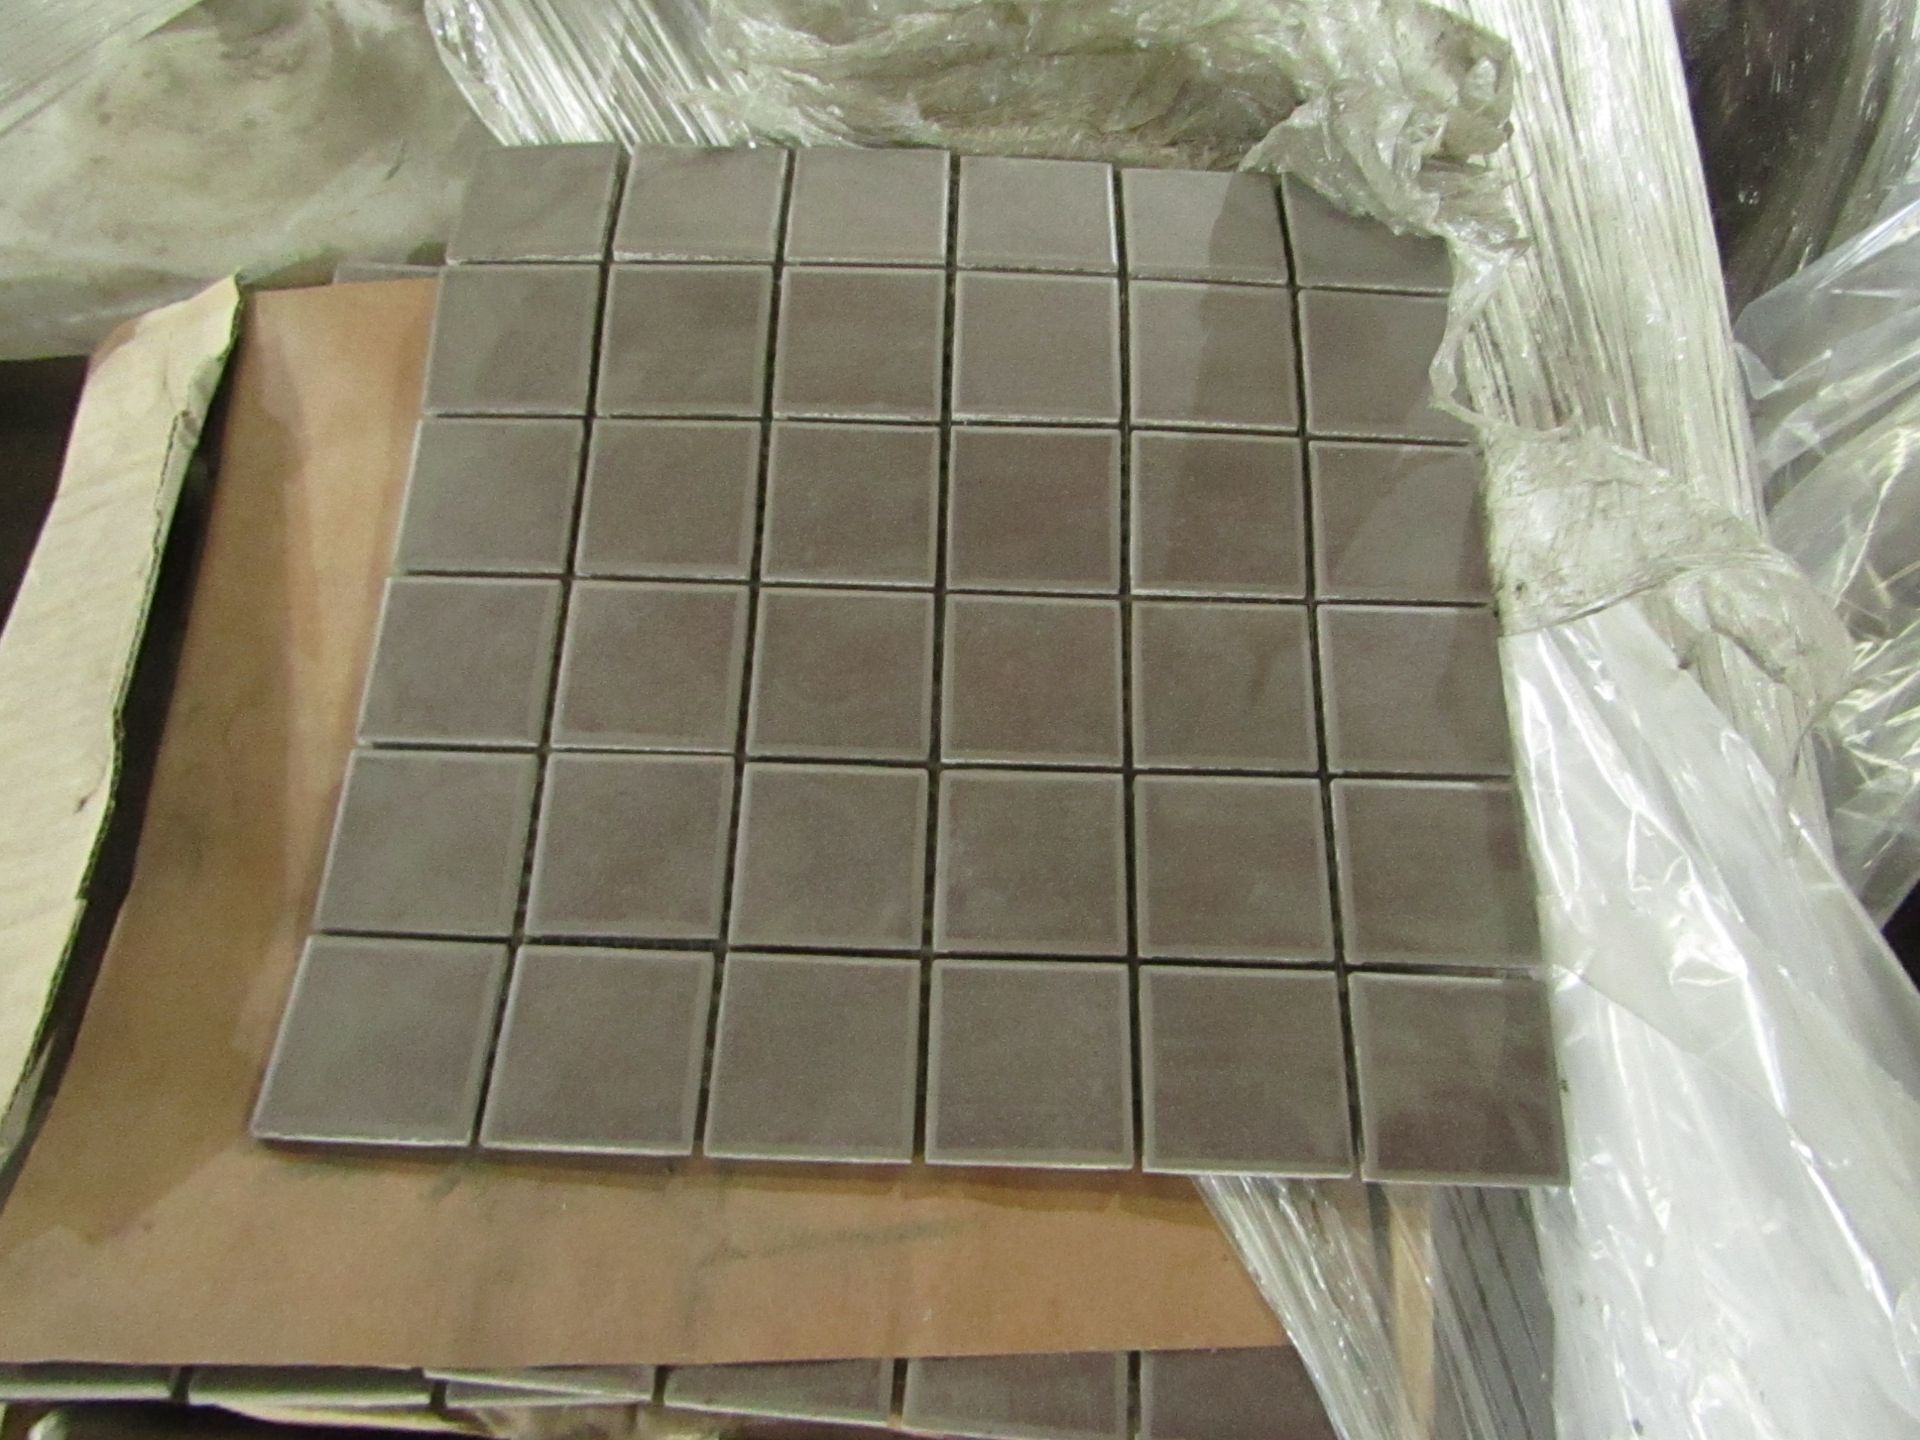 10x Boxes of 12 Vitra Sahara Mocha Mosaic 470x470mm tiles, brand new. Total RRP £34.99 per box,